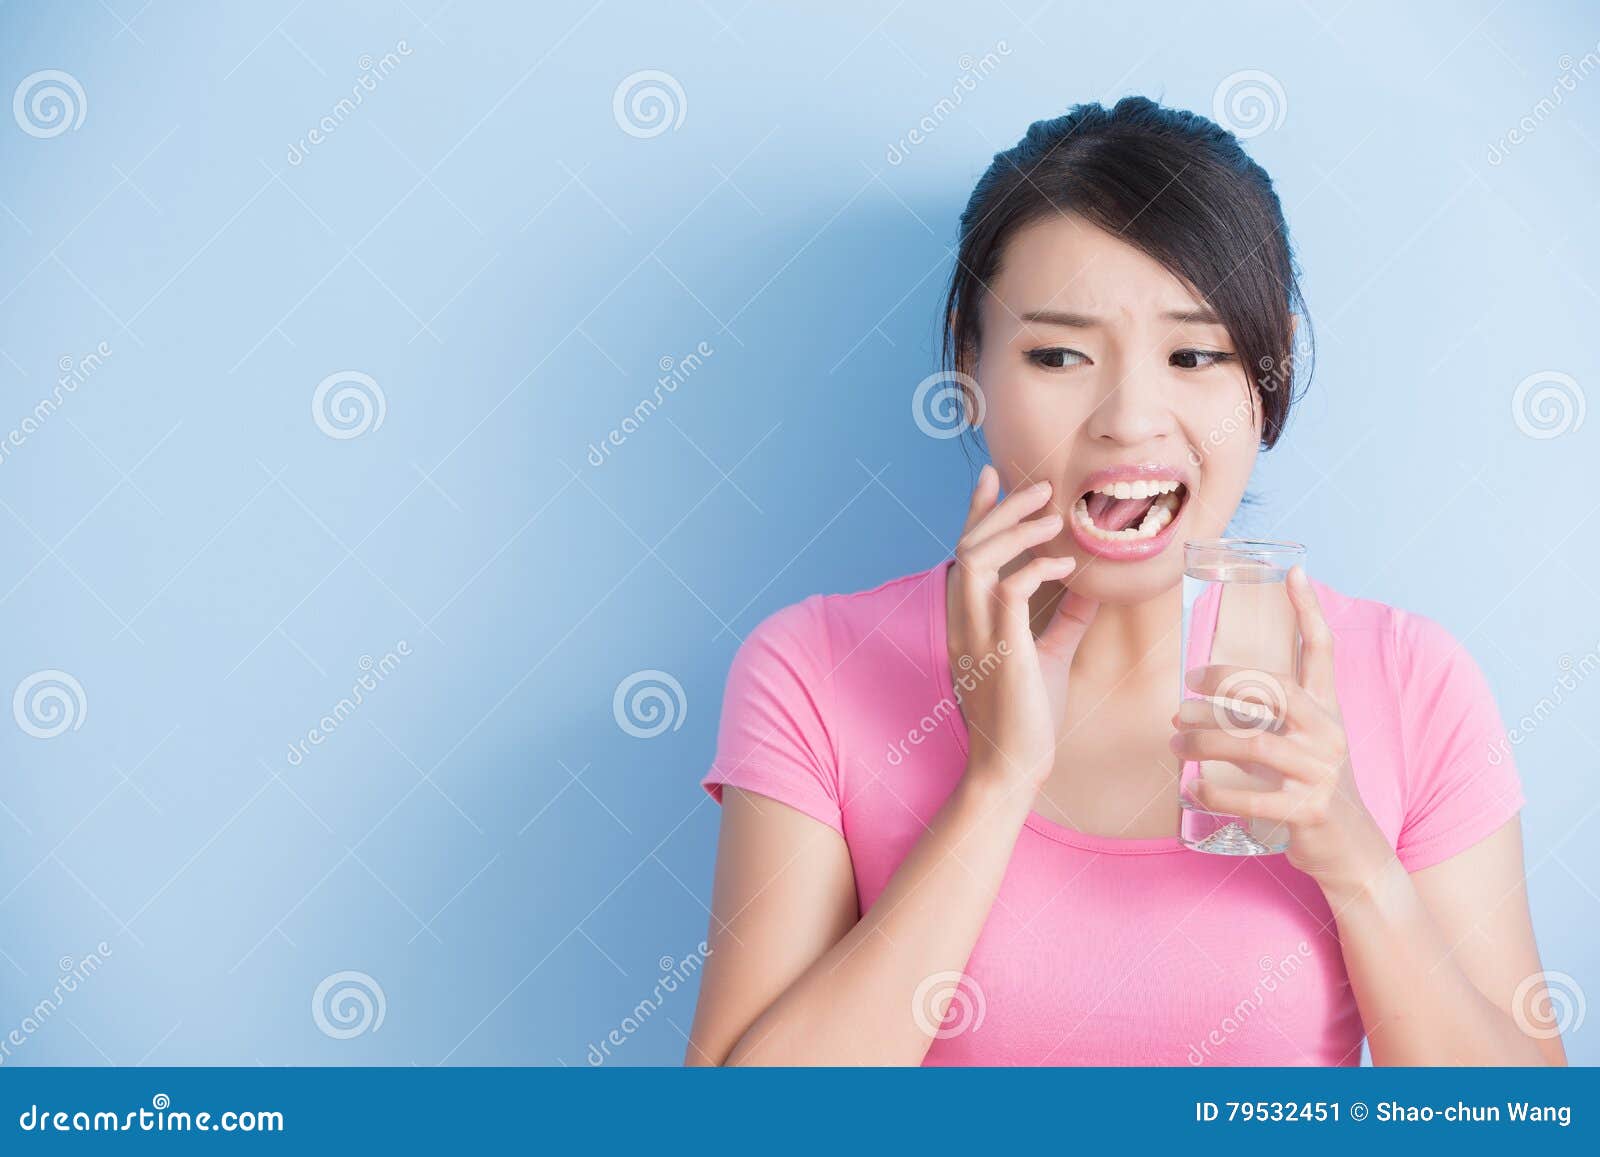 woman with sensitive teeth